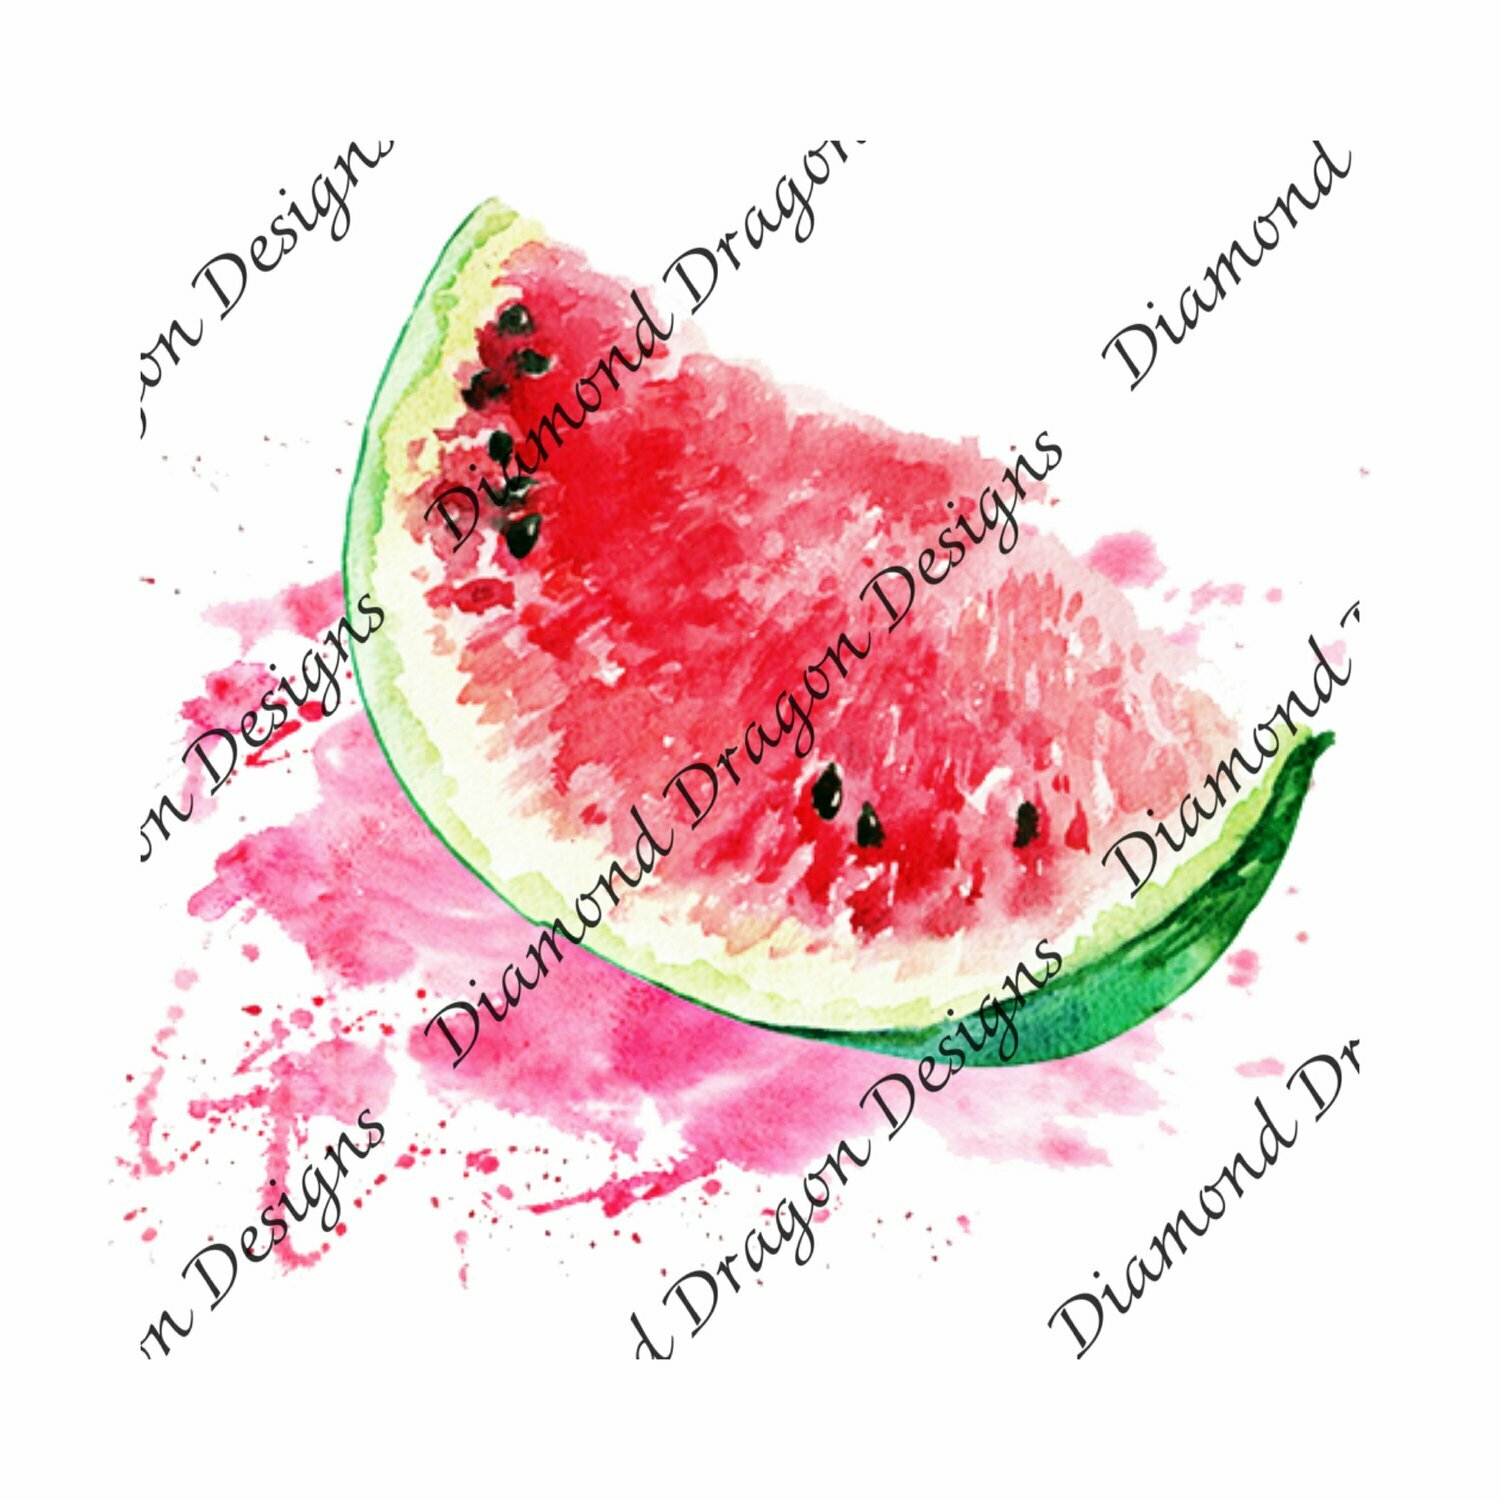 Watermelon - Summer time, Watermelon Slice, Watercolor, Digital Image